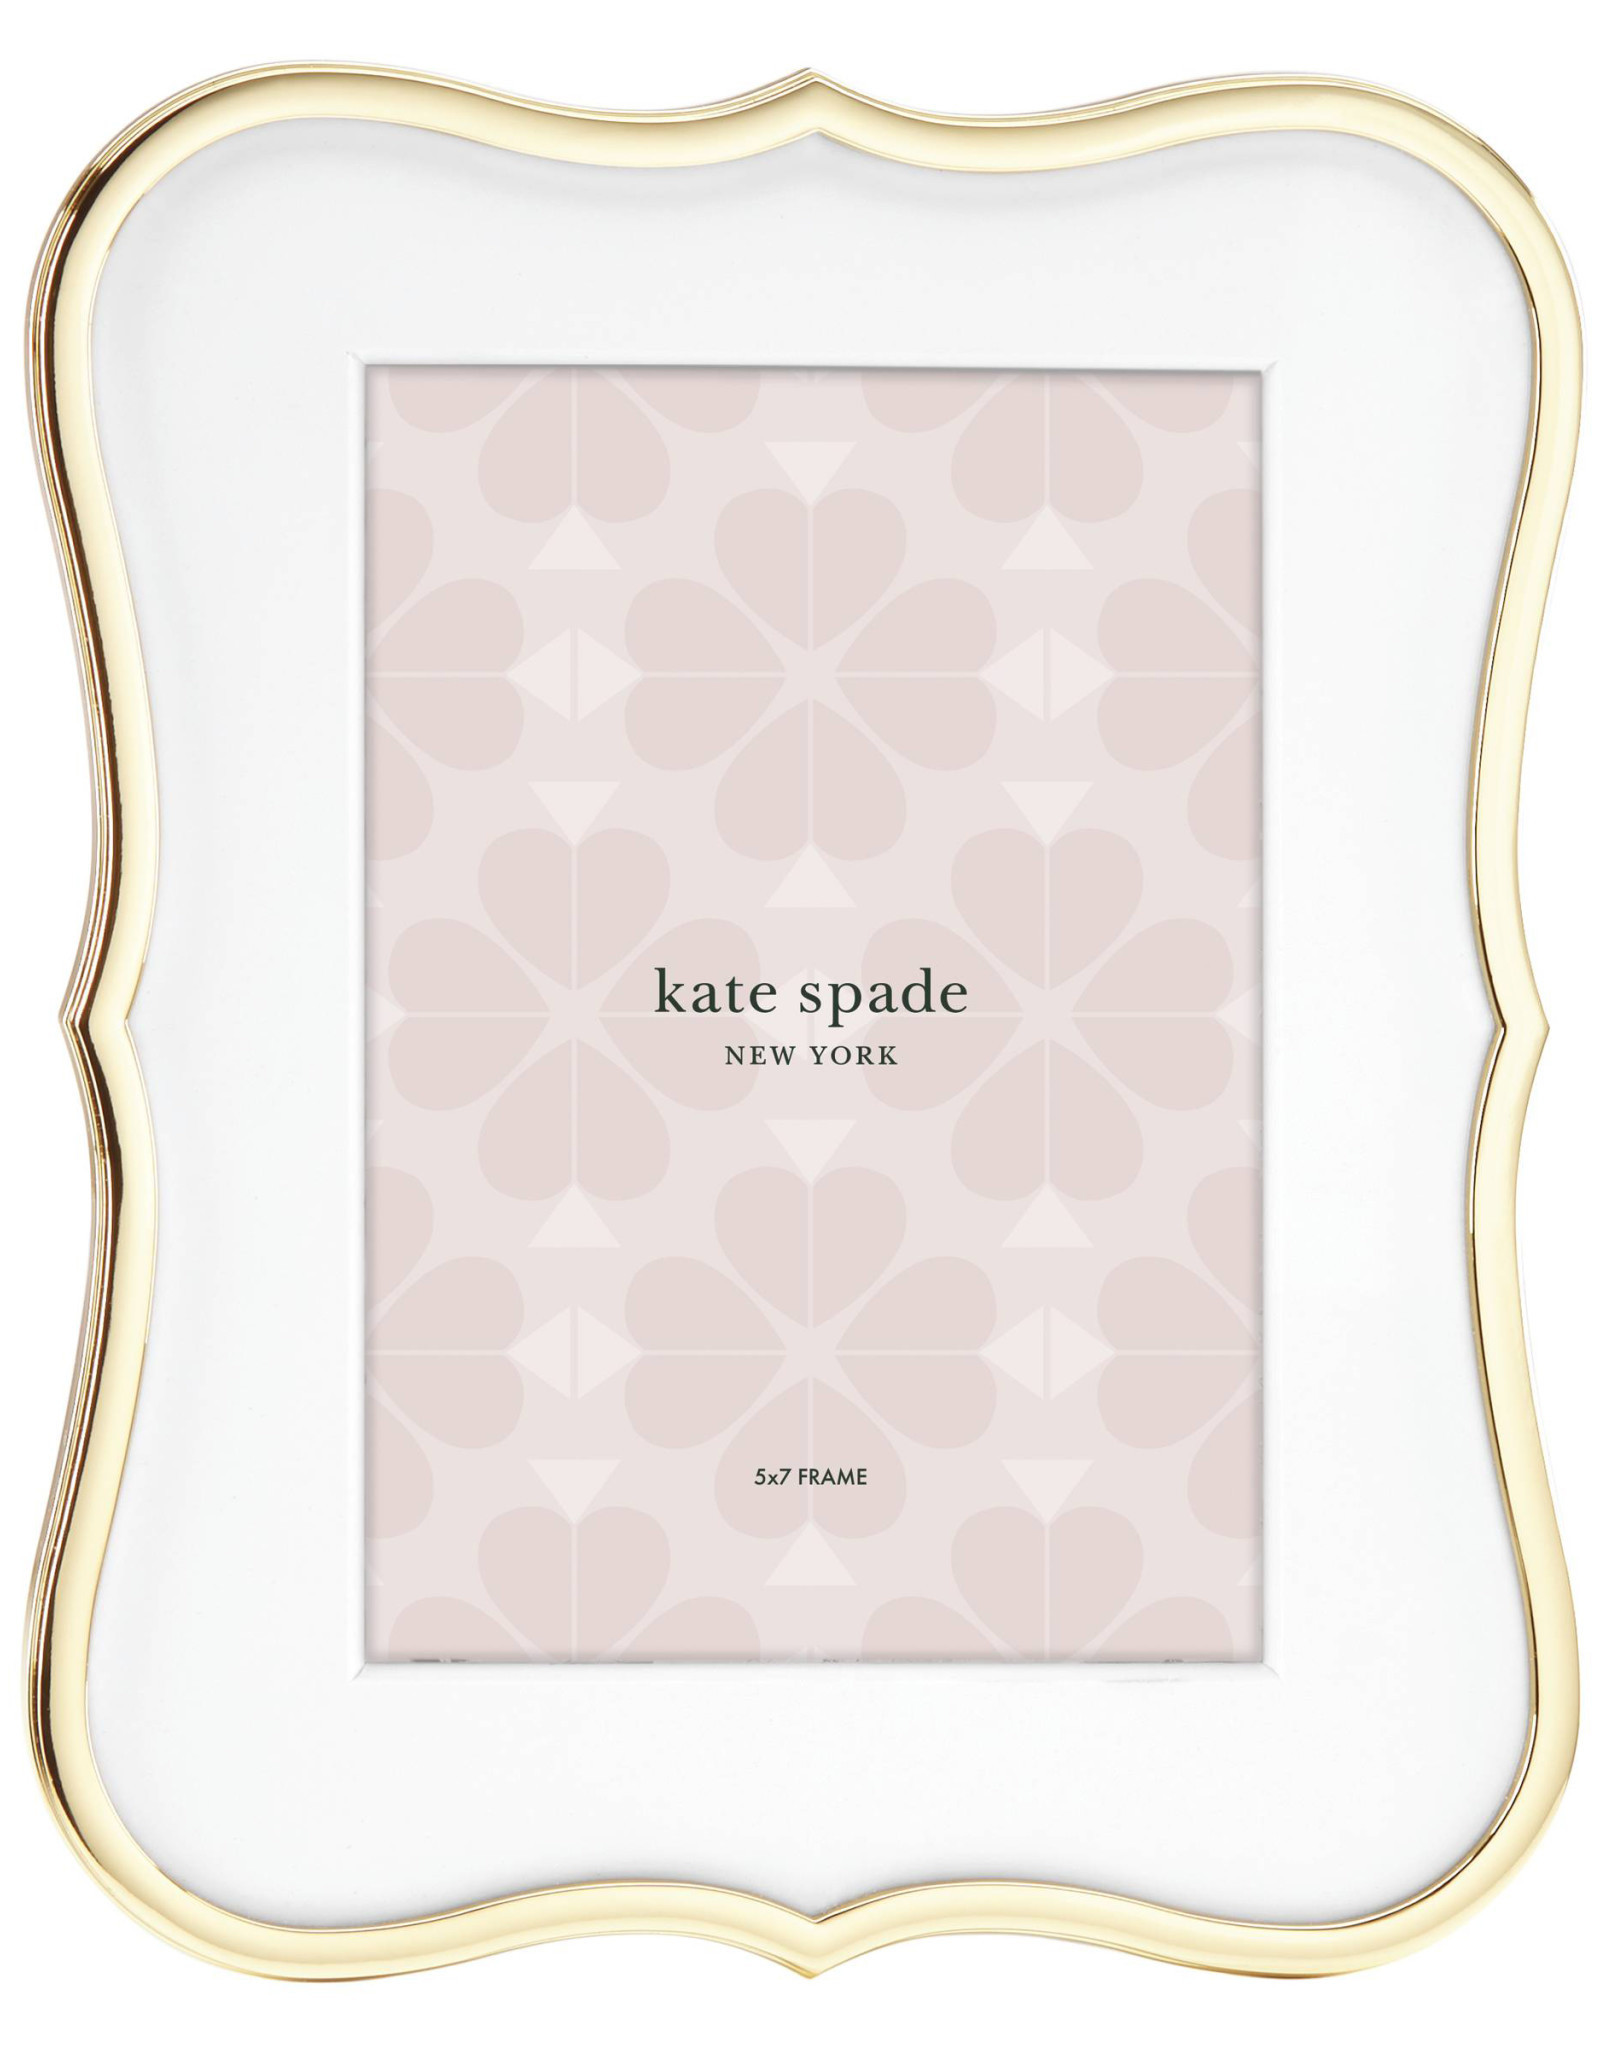 Kate Spade Crown gold frame 5x7